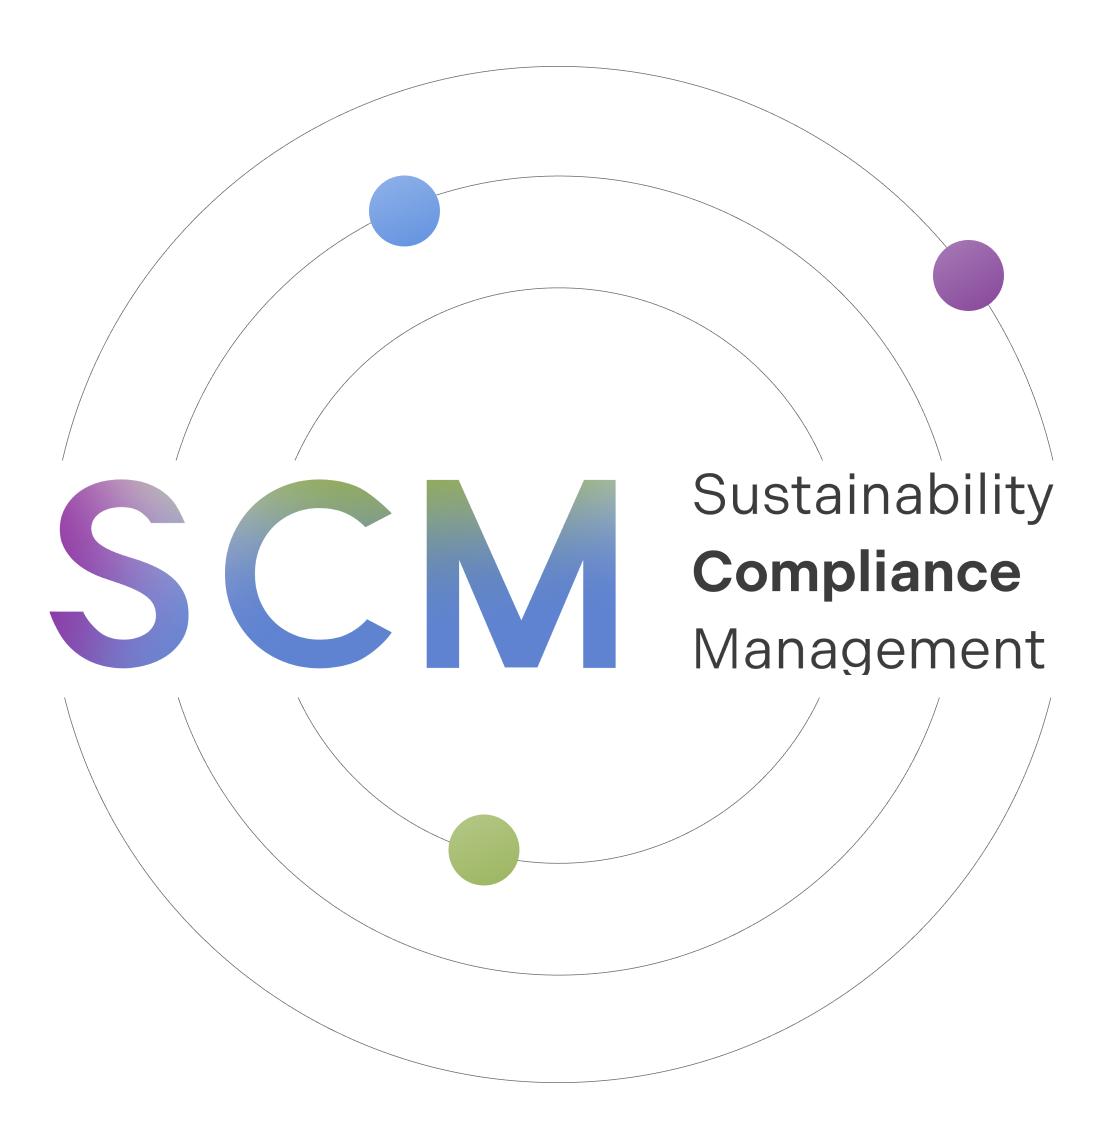 Sustainability Compliance Management (SCM)